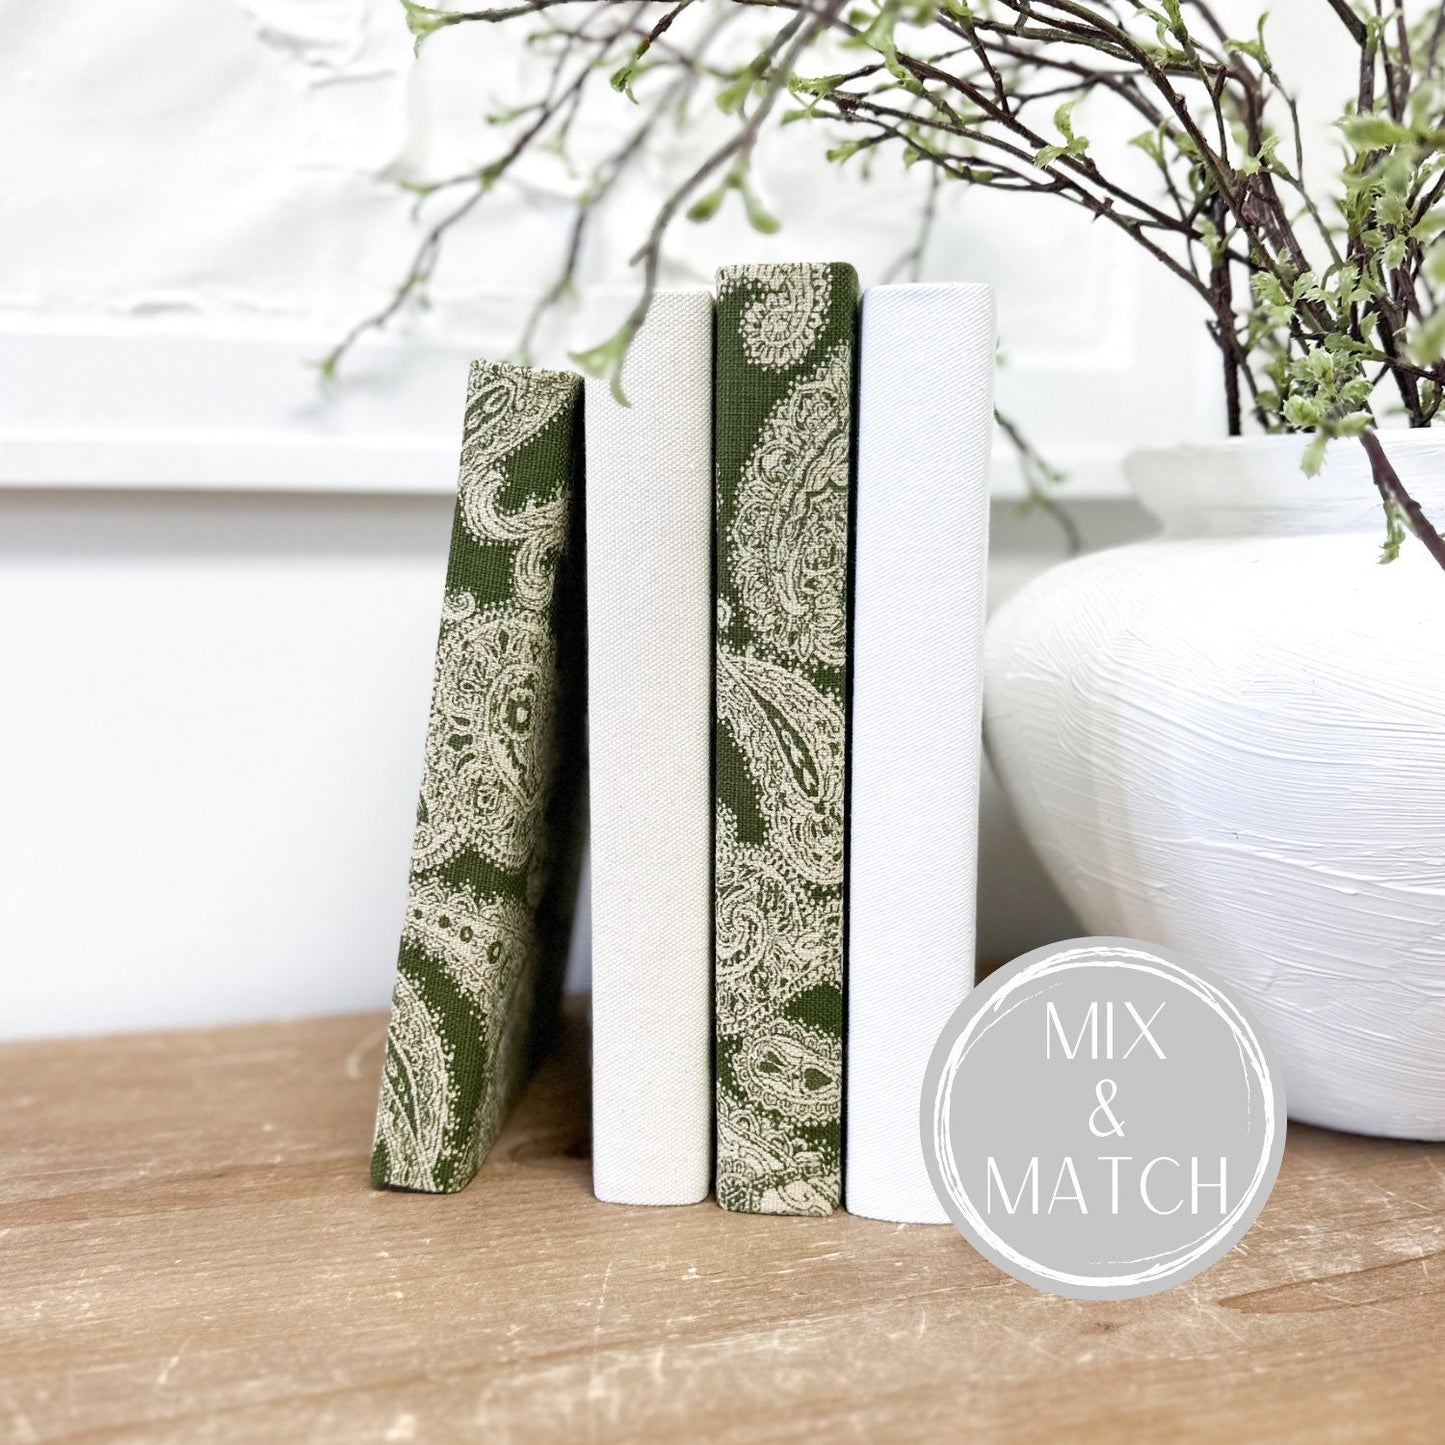 Linen Covered Books, Decorative Books for Home Decor, Bookshelf Decor